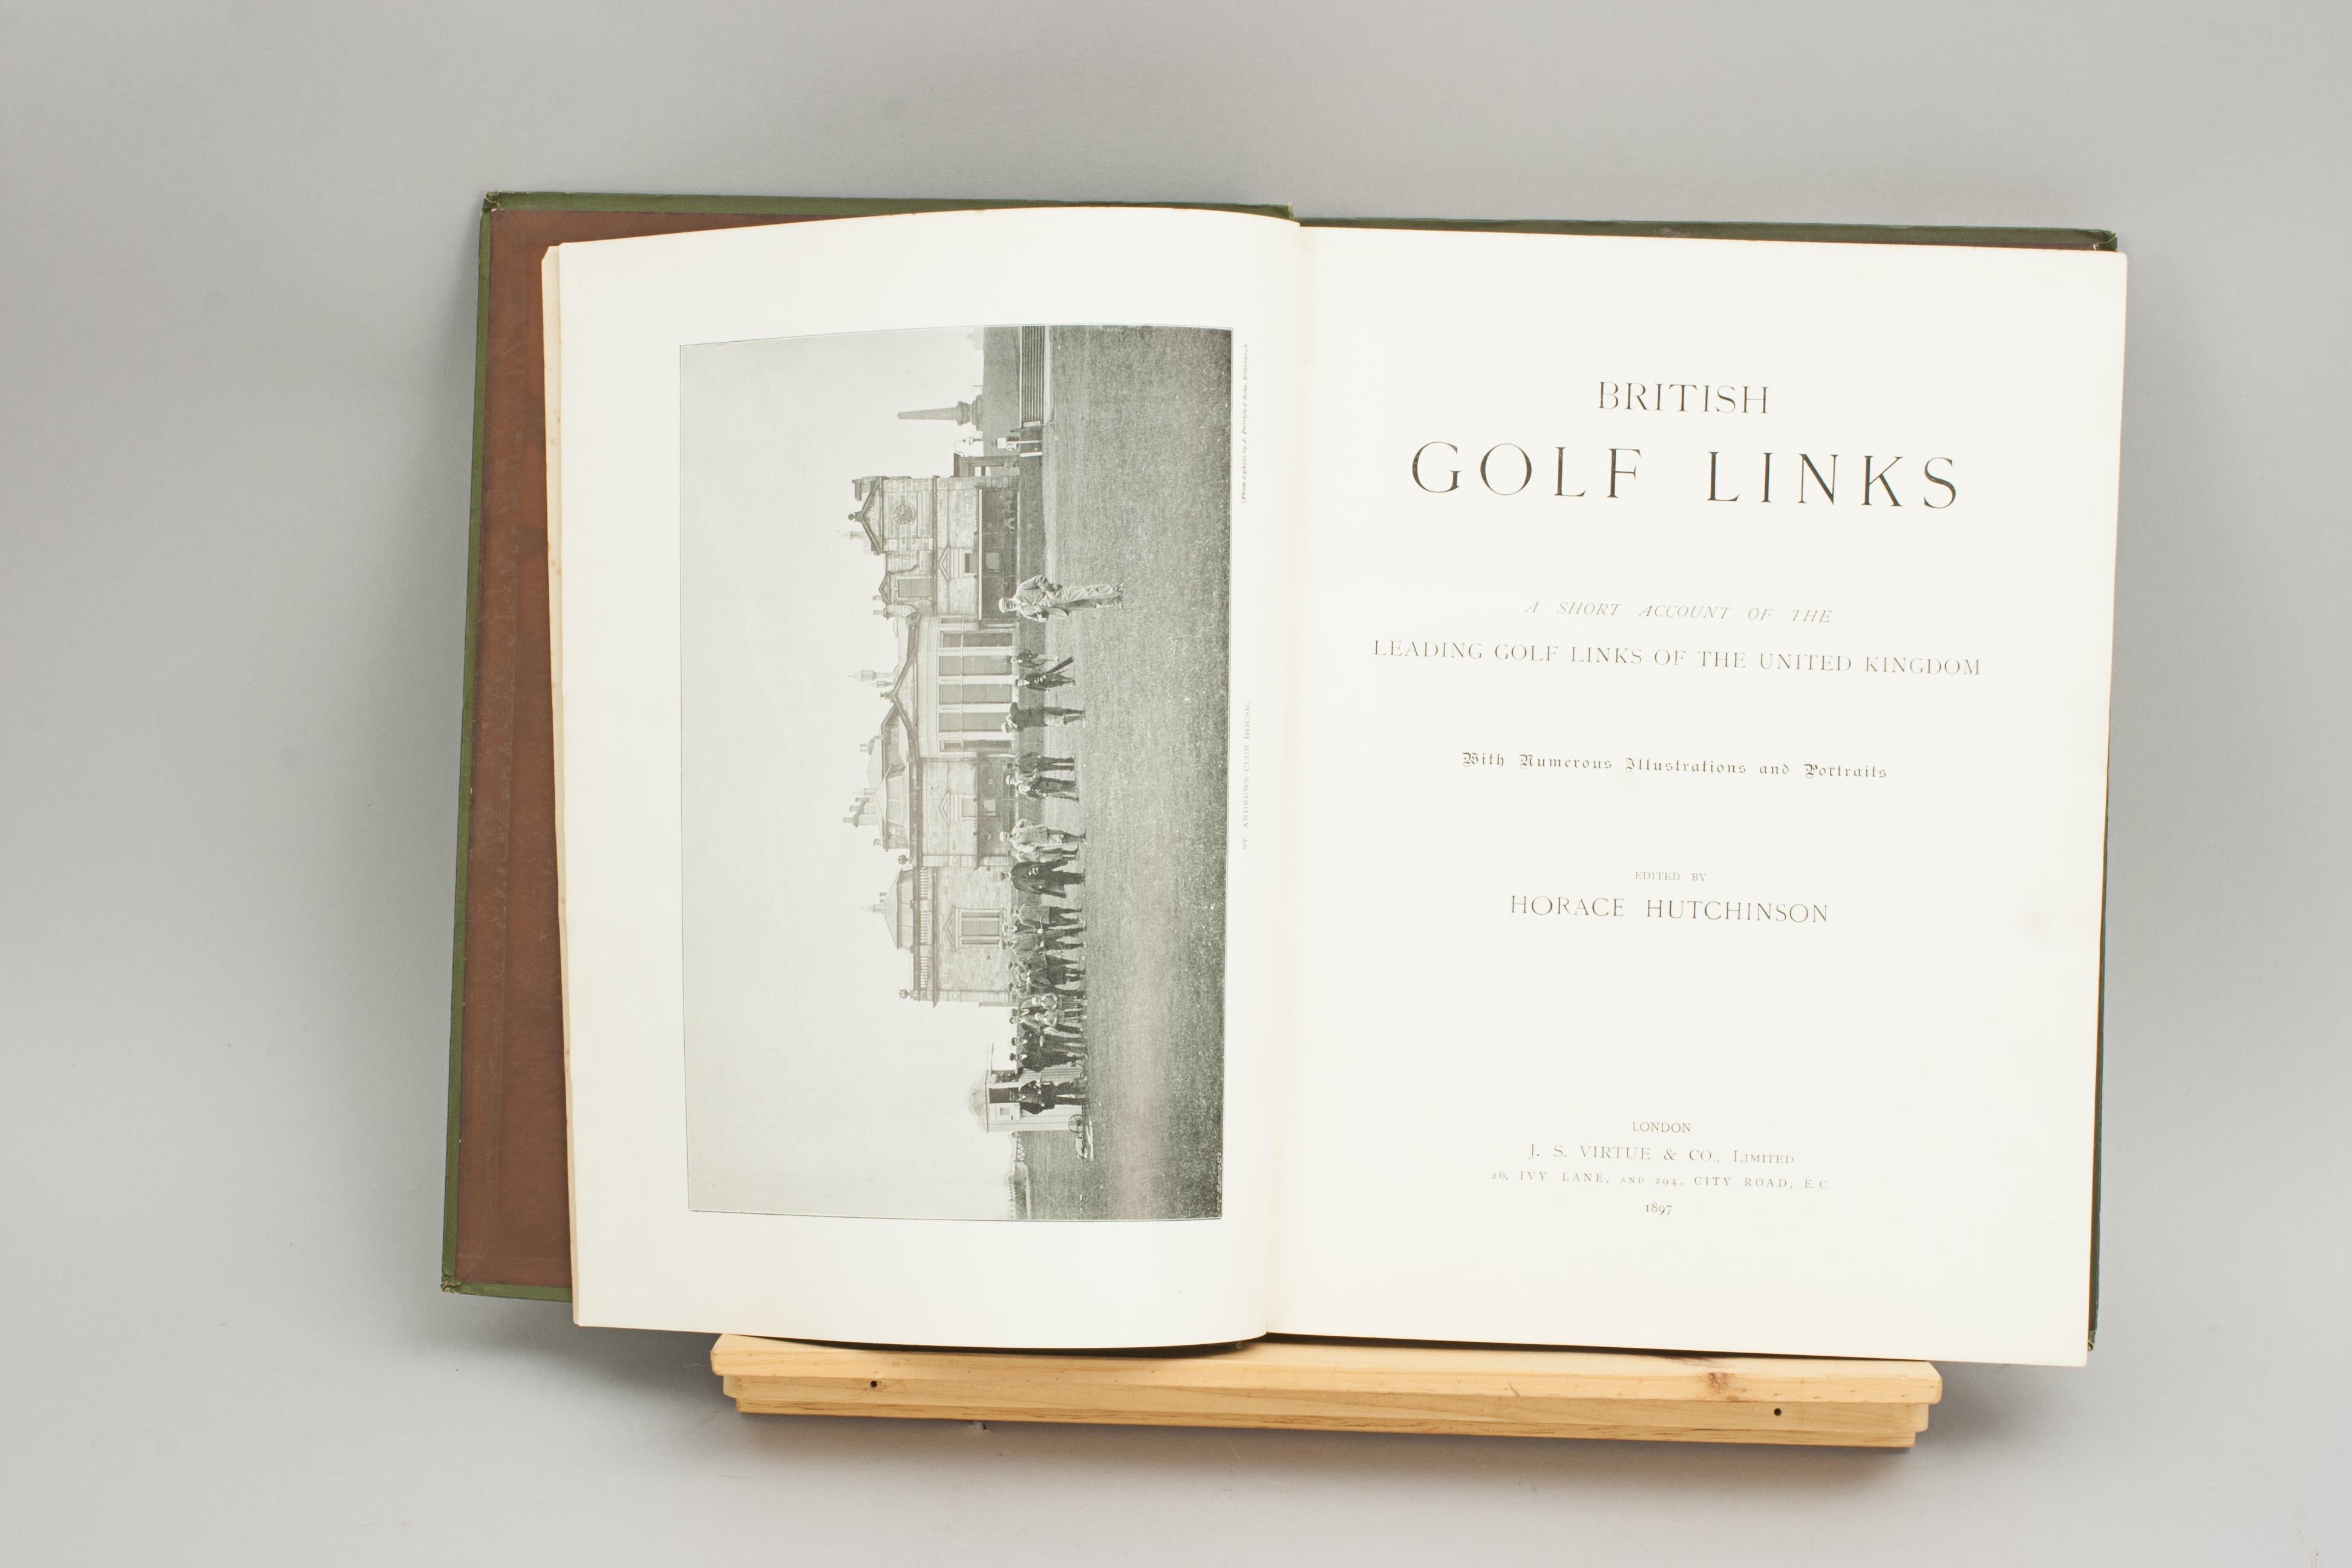 European Golf Book, British Golf Links by Horace Hutchinson